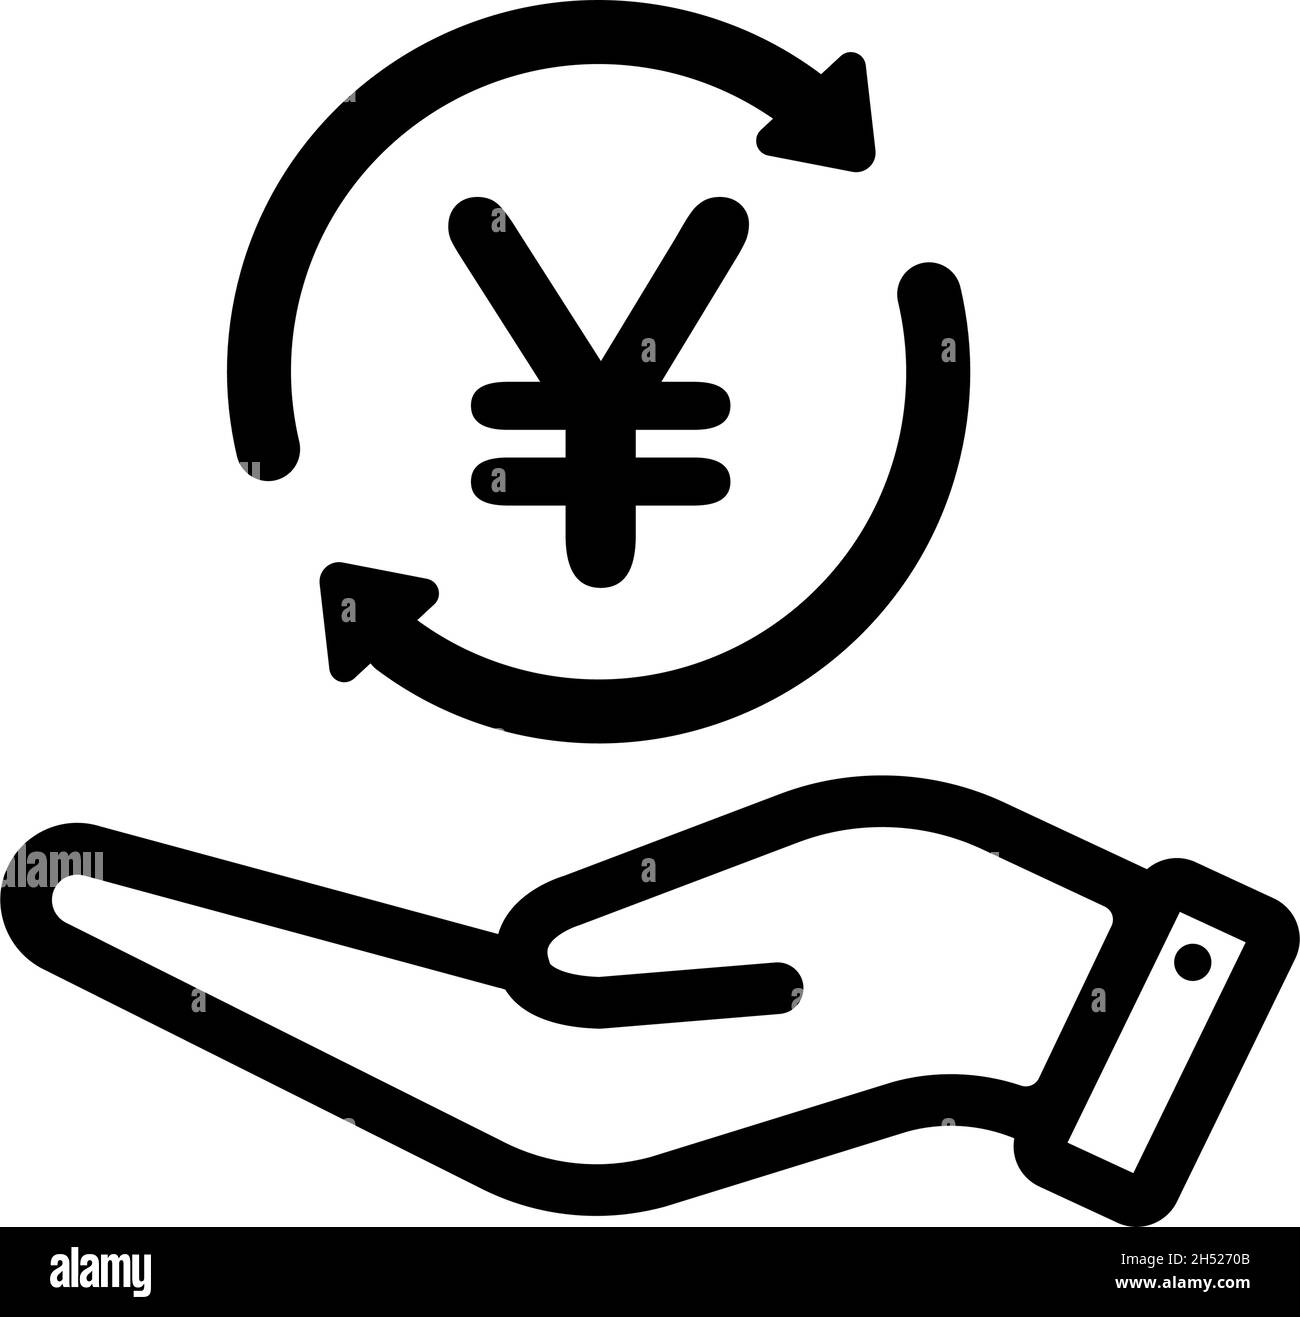 Money exchange , investment vector icon illustration (JPY, Japanese Yen ) Stock Vector